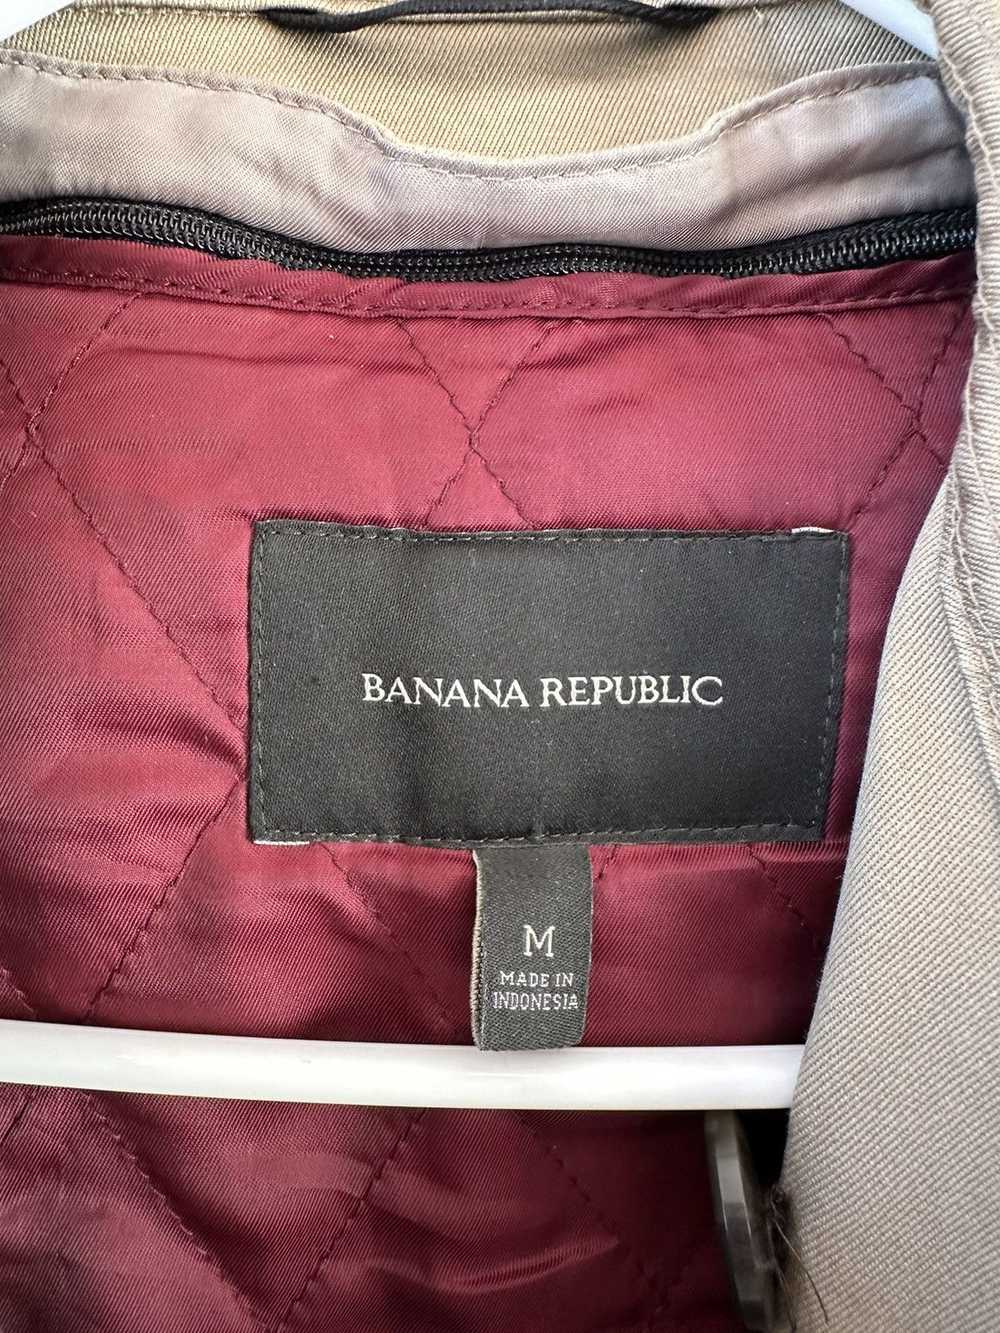 Banana Republic Banana republic trench coat - image 2